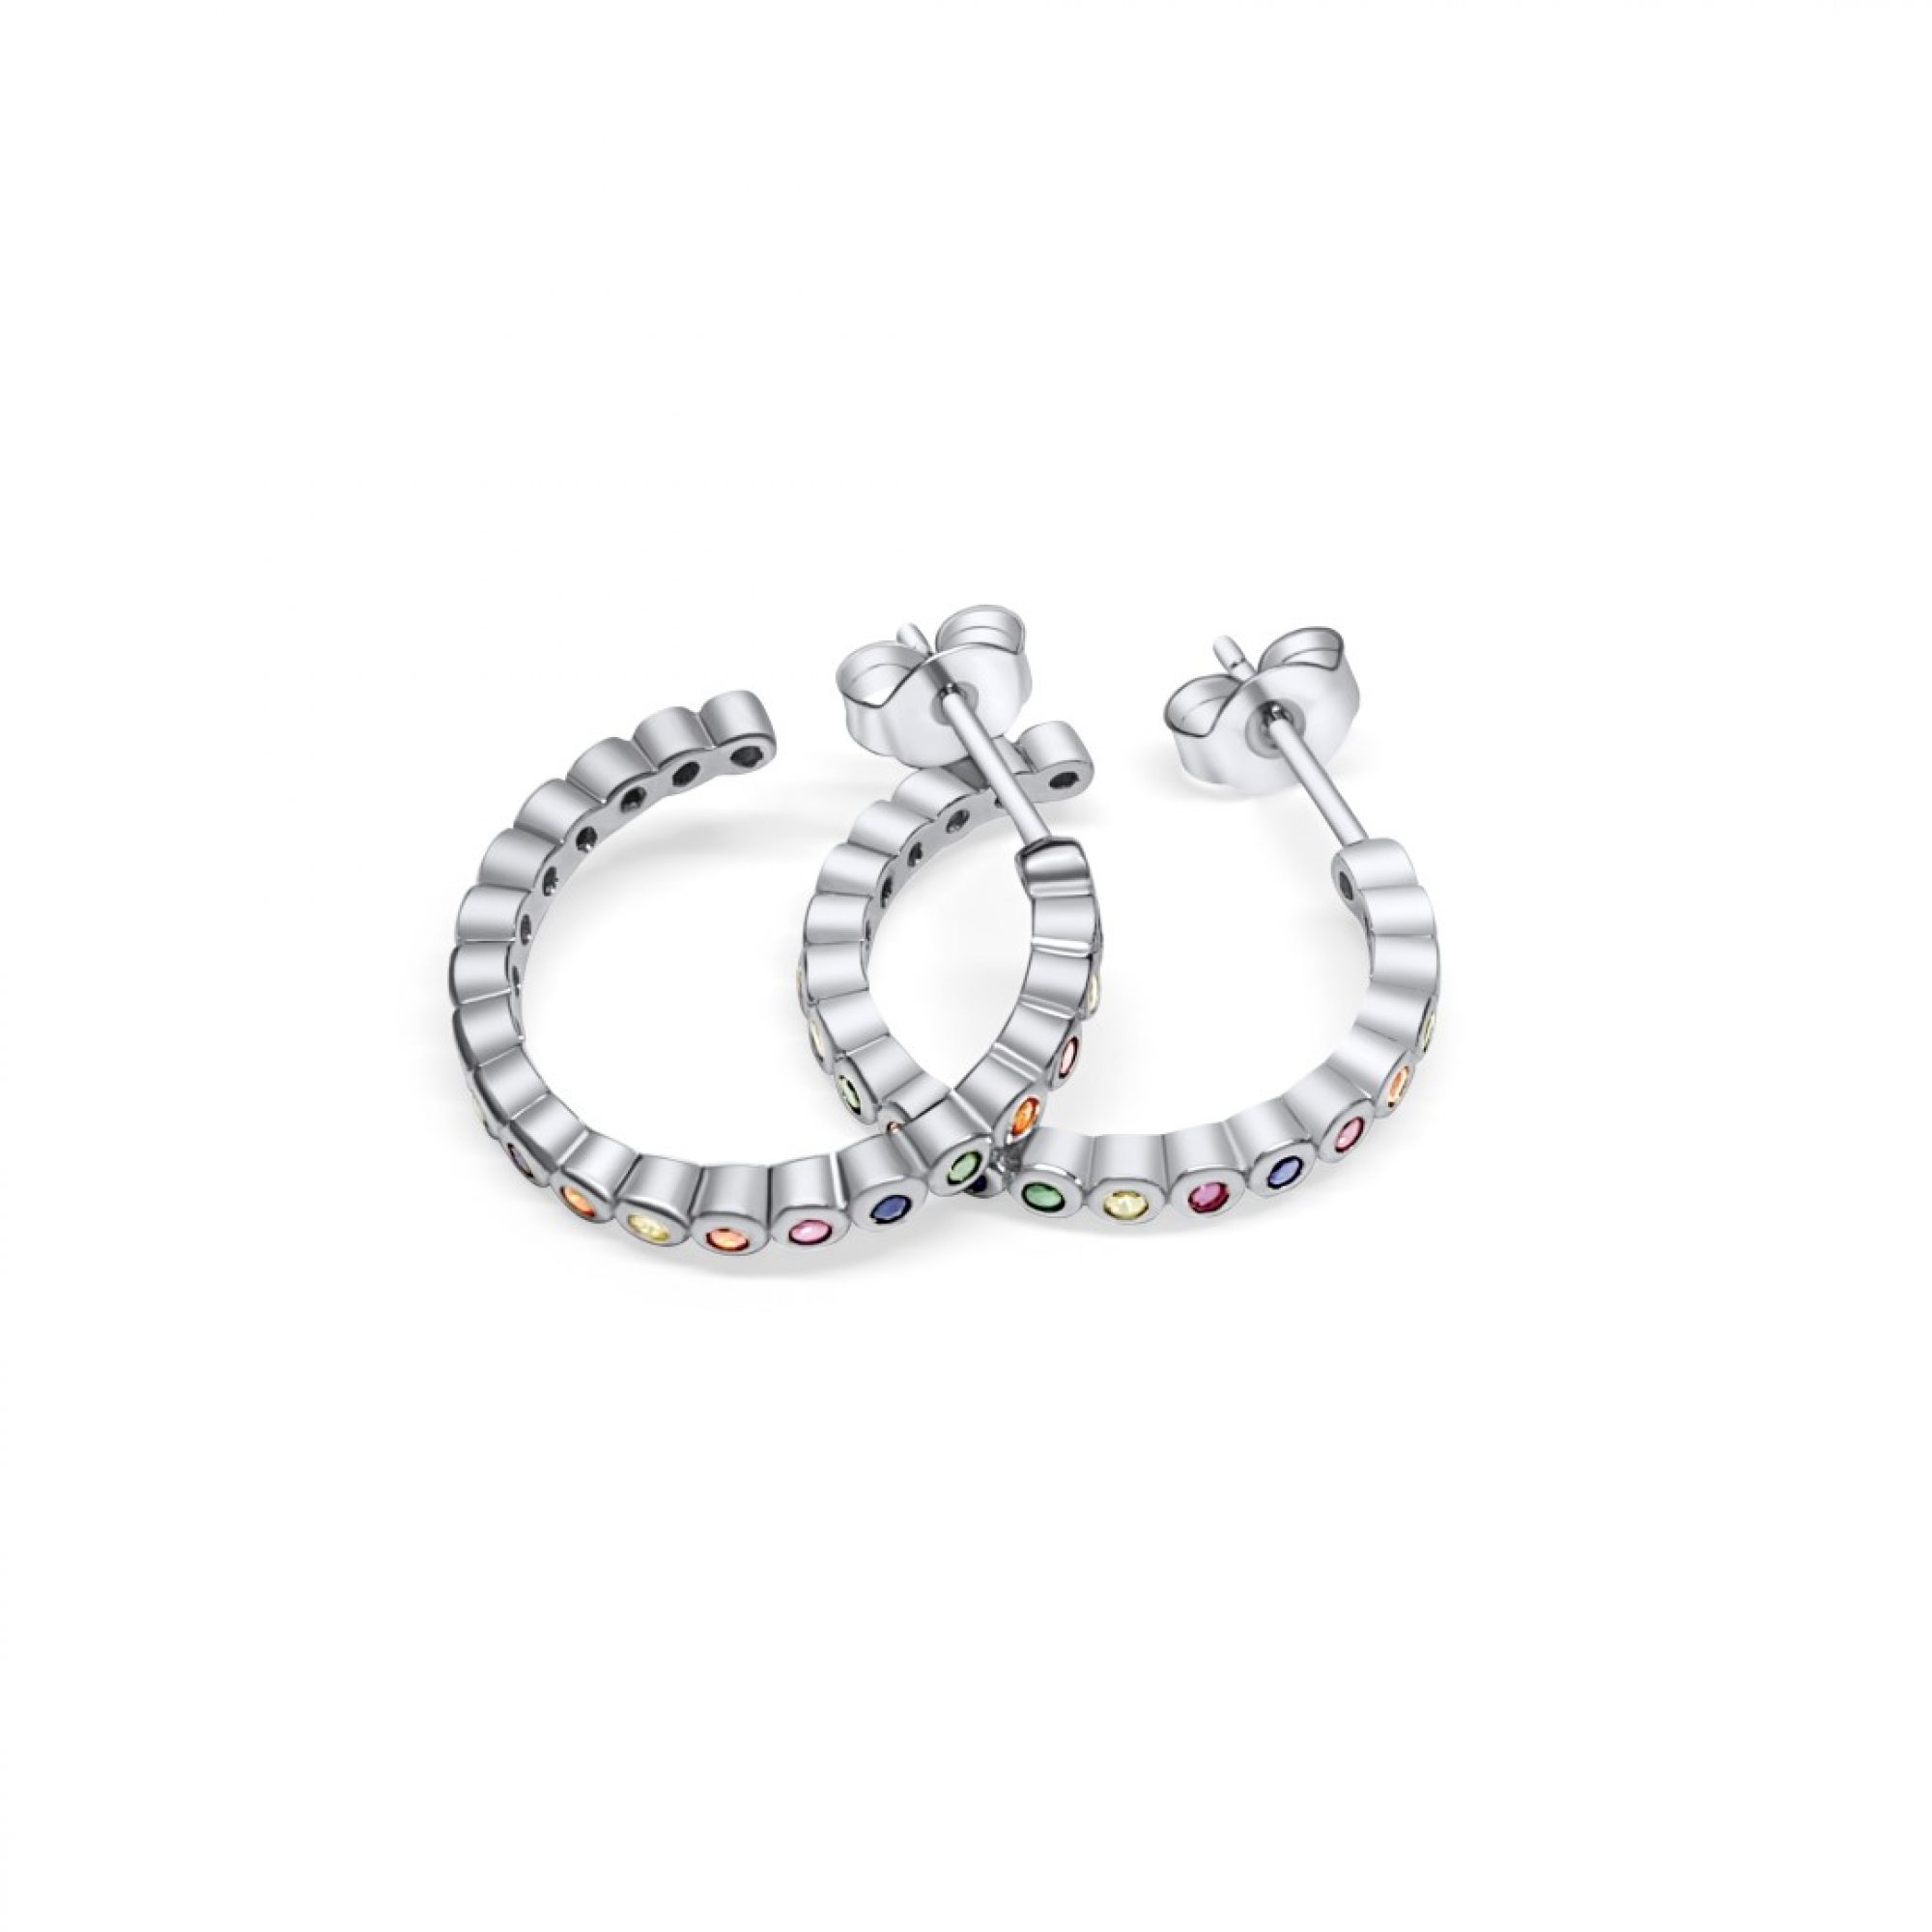 Silver earrings with zircon stones